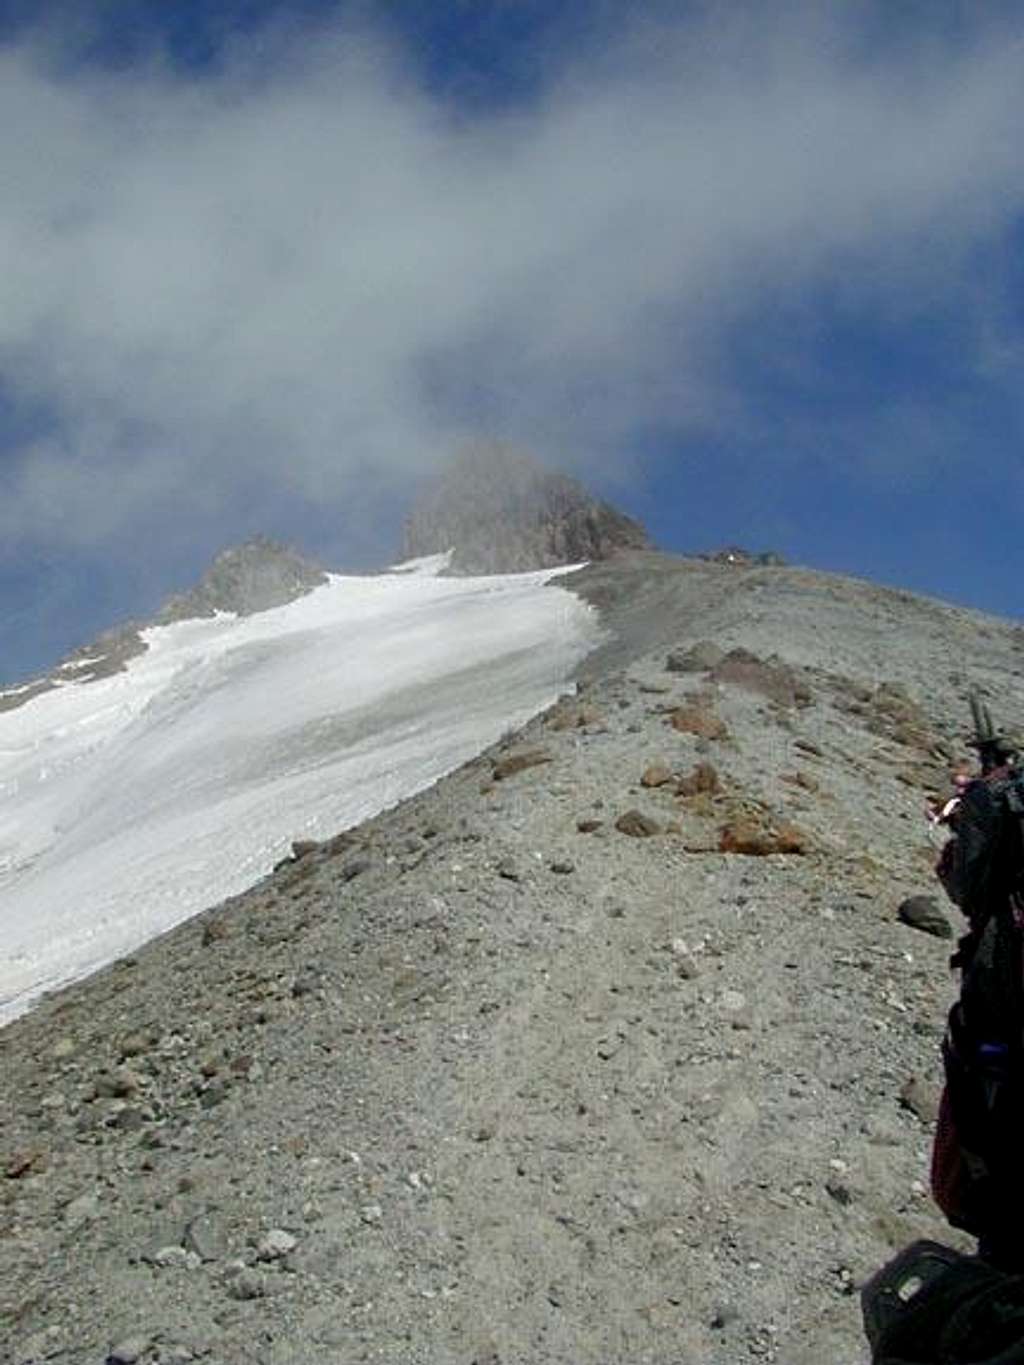 Pummice ridge to the Summit...